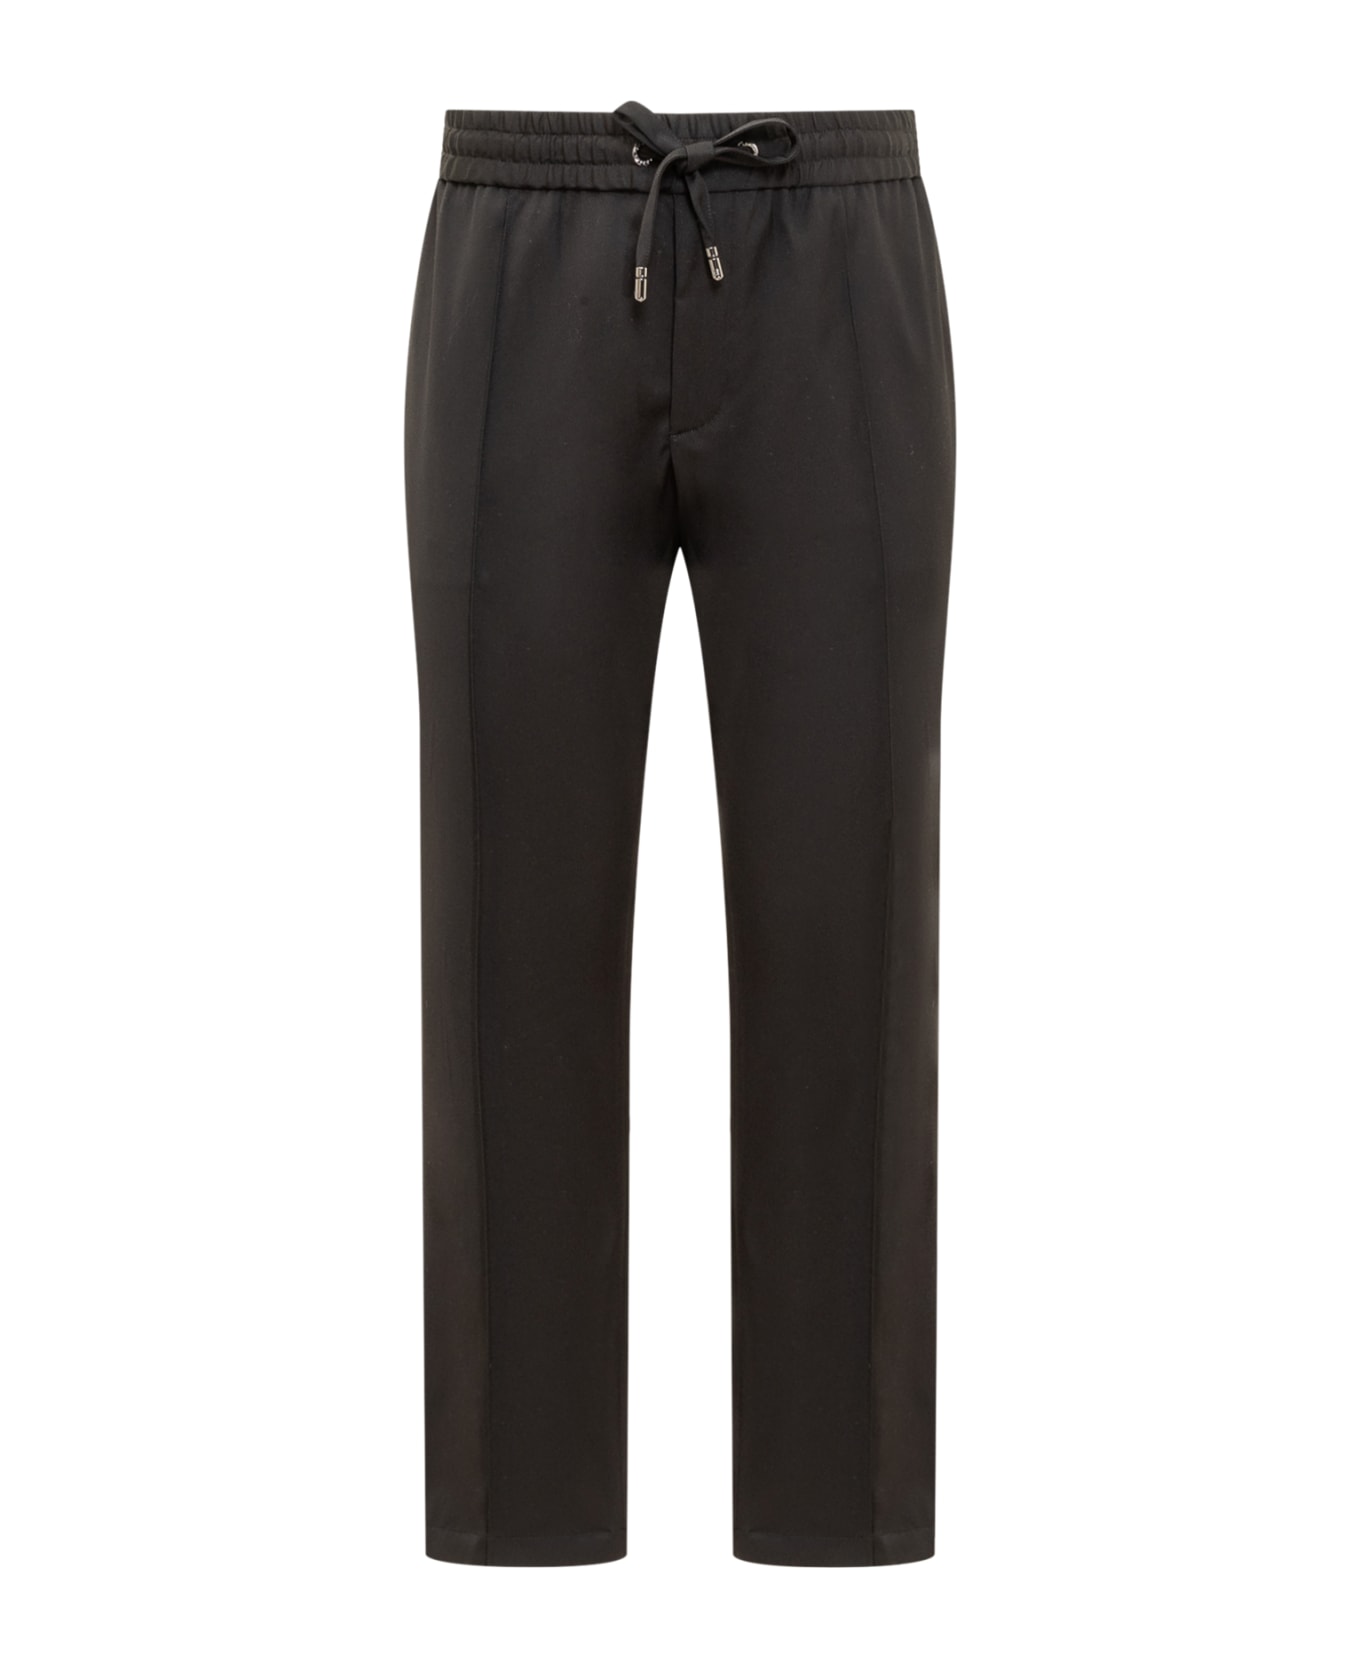 Dolce & Gabbana Tailored Trousers - NERO